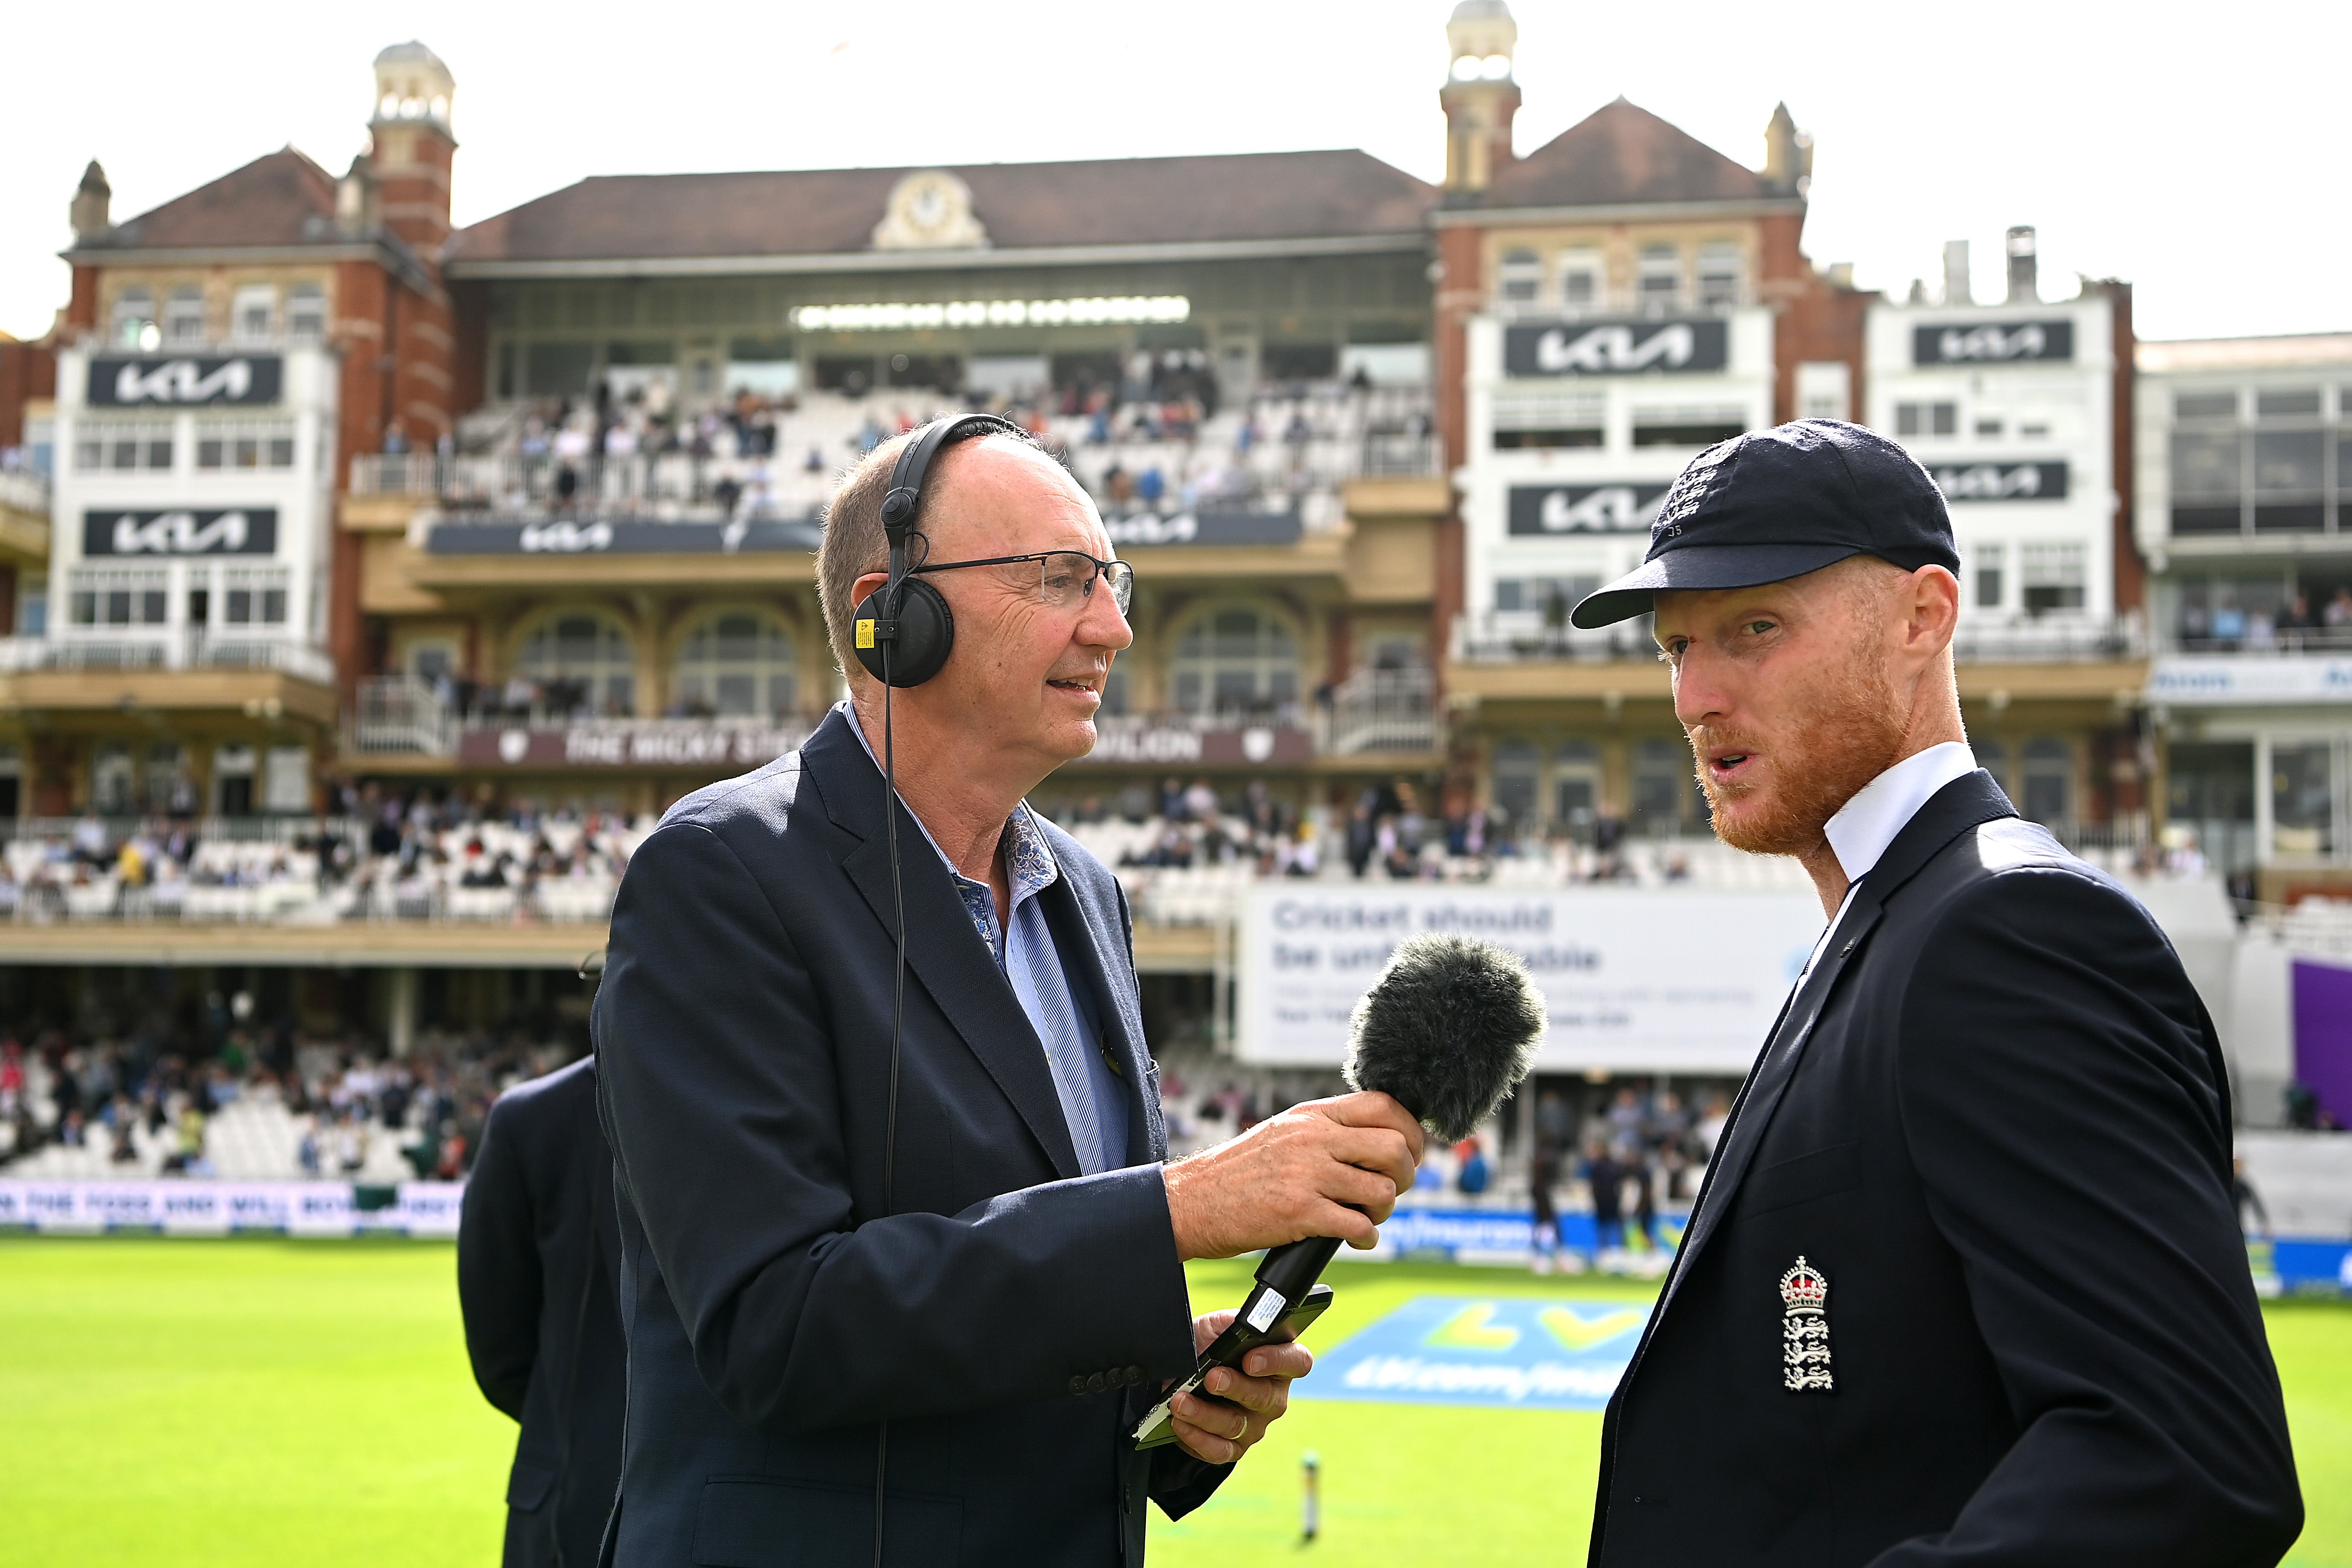 Jonathan Agew will step down as BBC Cricket Correspondent